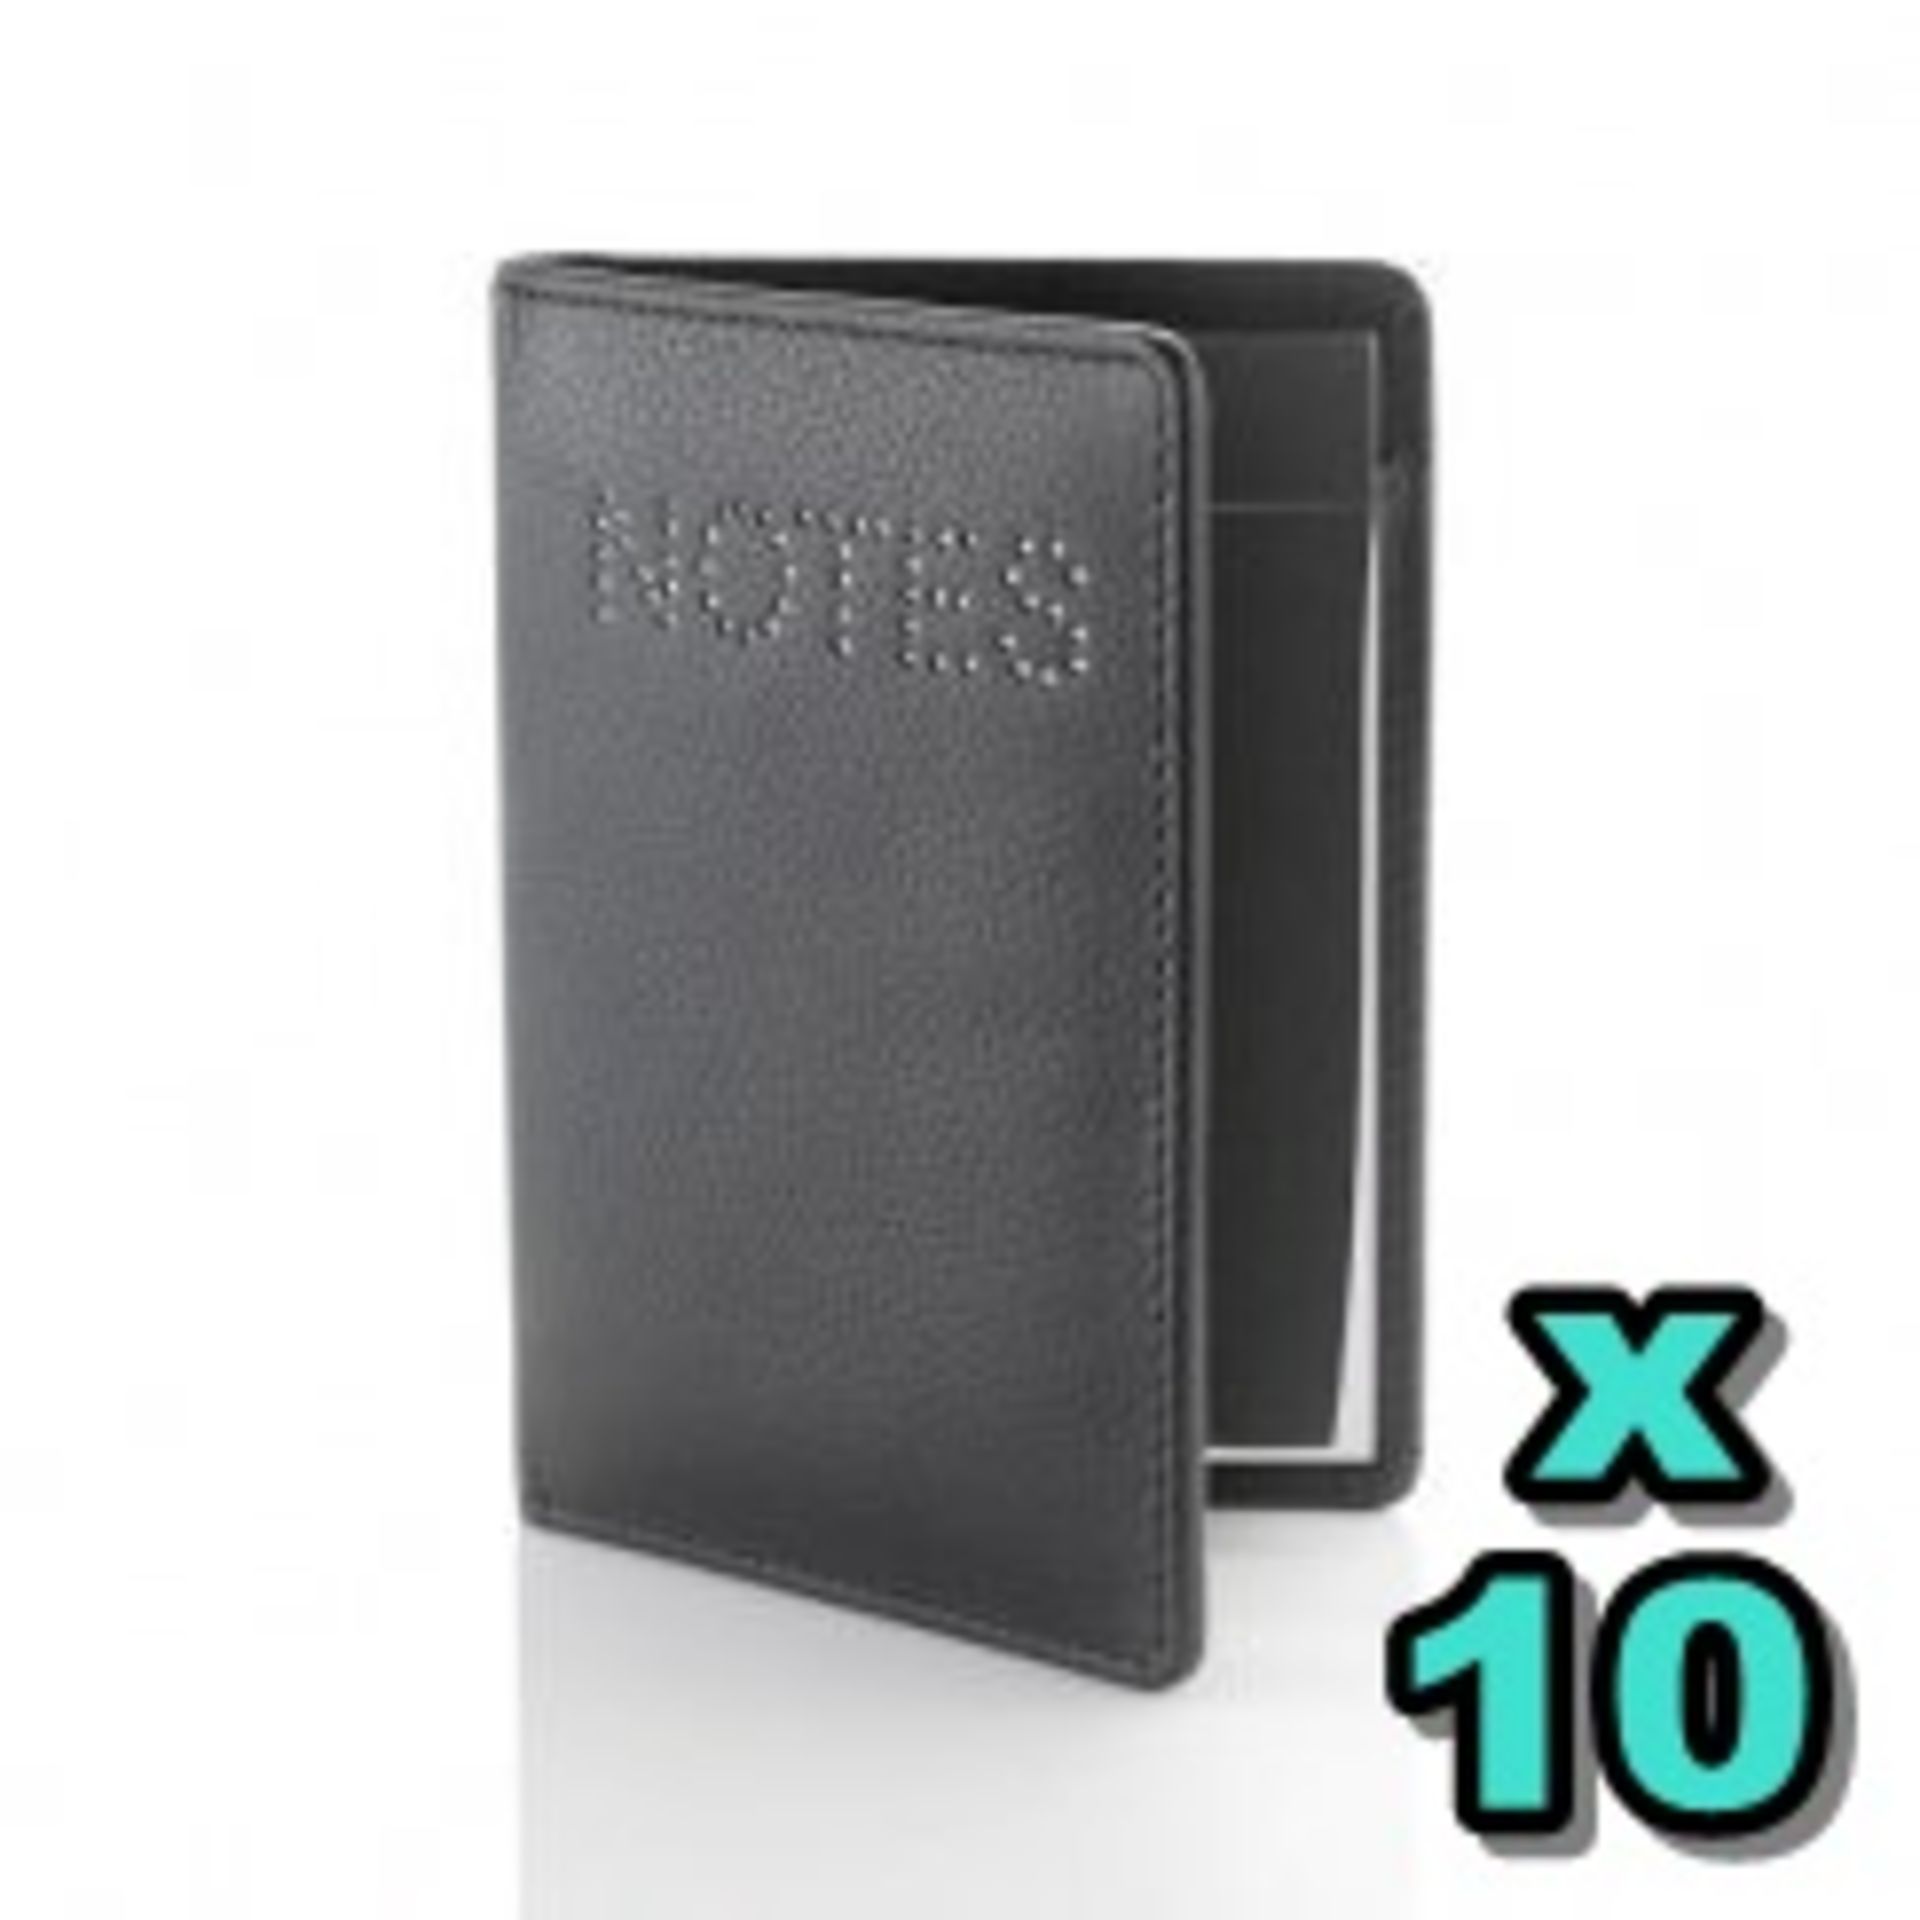 10 x Genuine Fine Leather Note Books With Swarovski Elements By ICE London - EGW-6011-BK - Fits